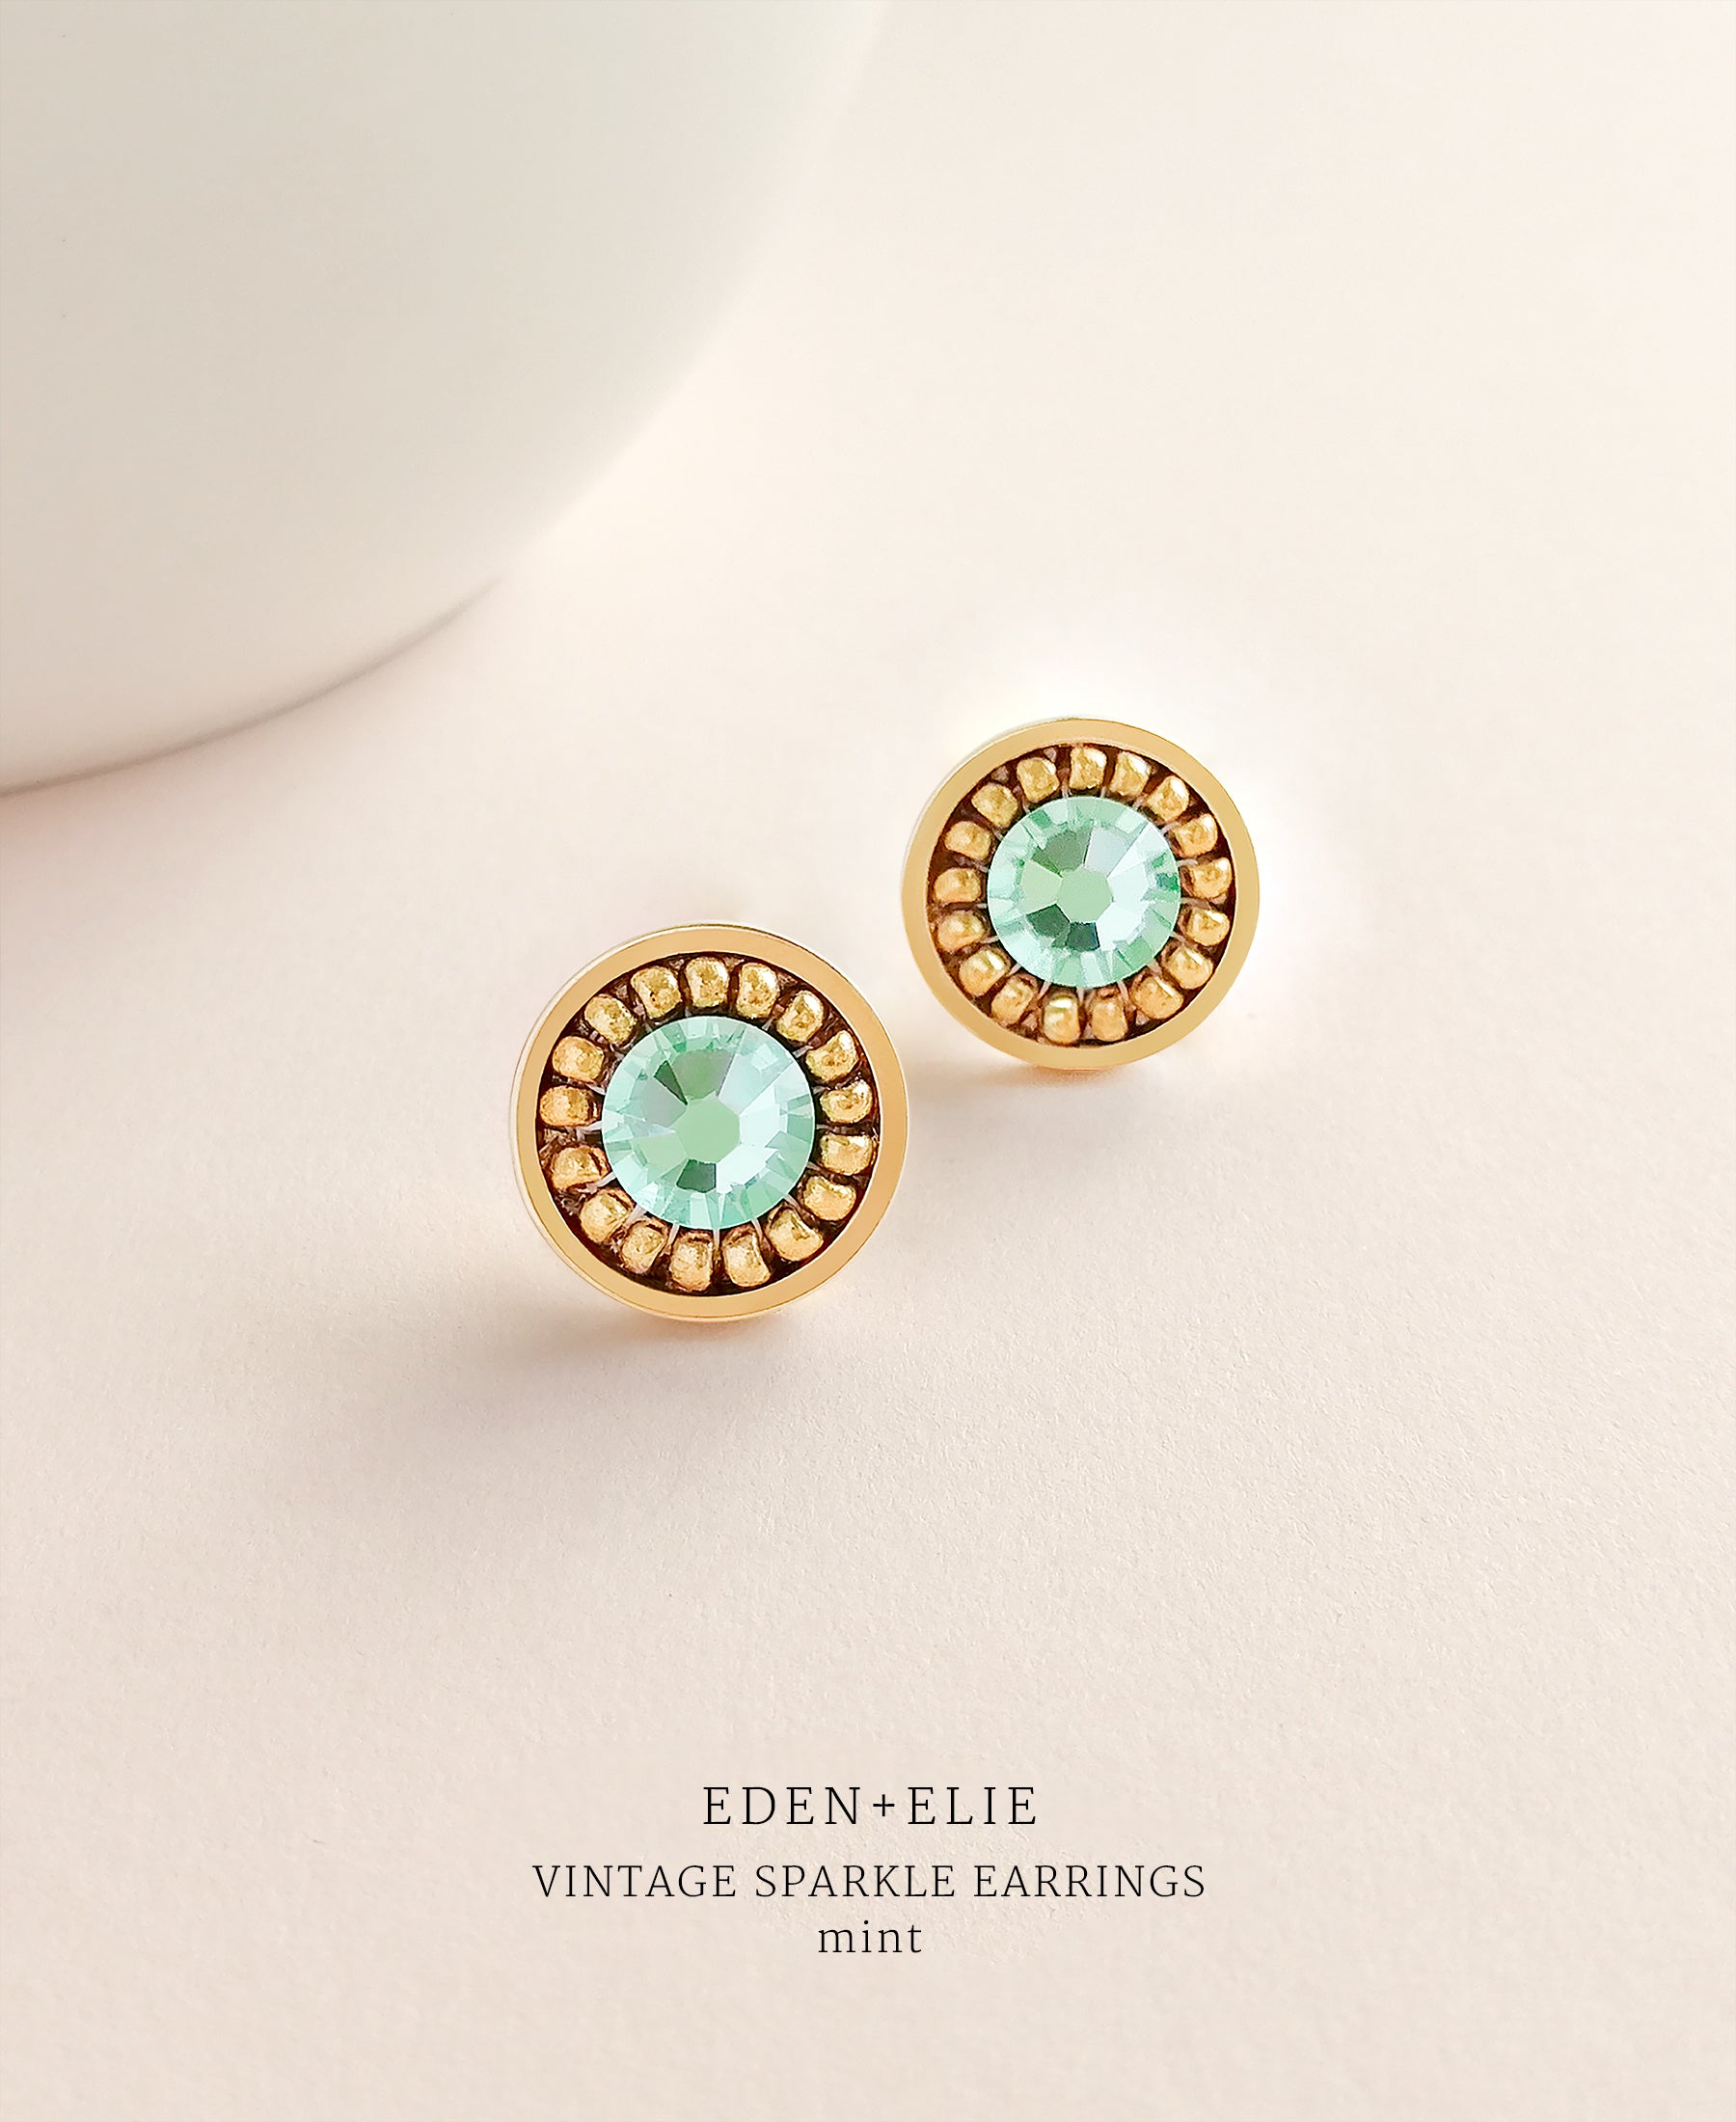 EDEN + ELIE gold plated jewelry Vintage Sparkle stud earrings - mint green